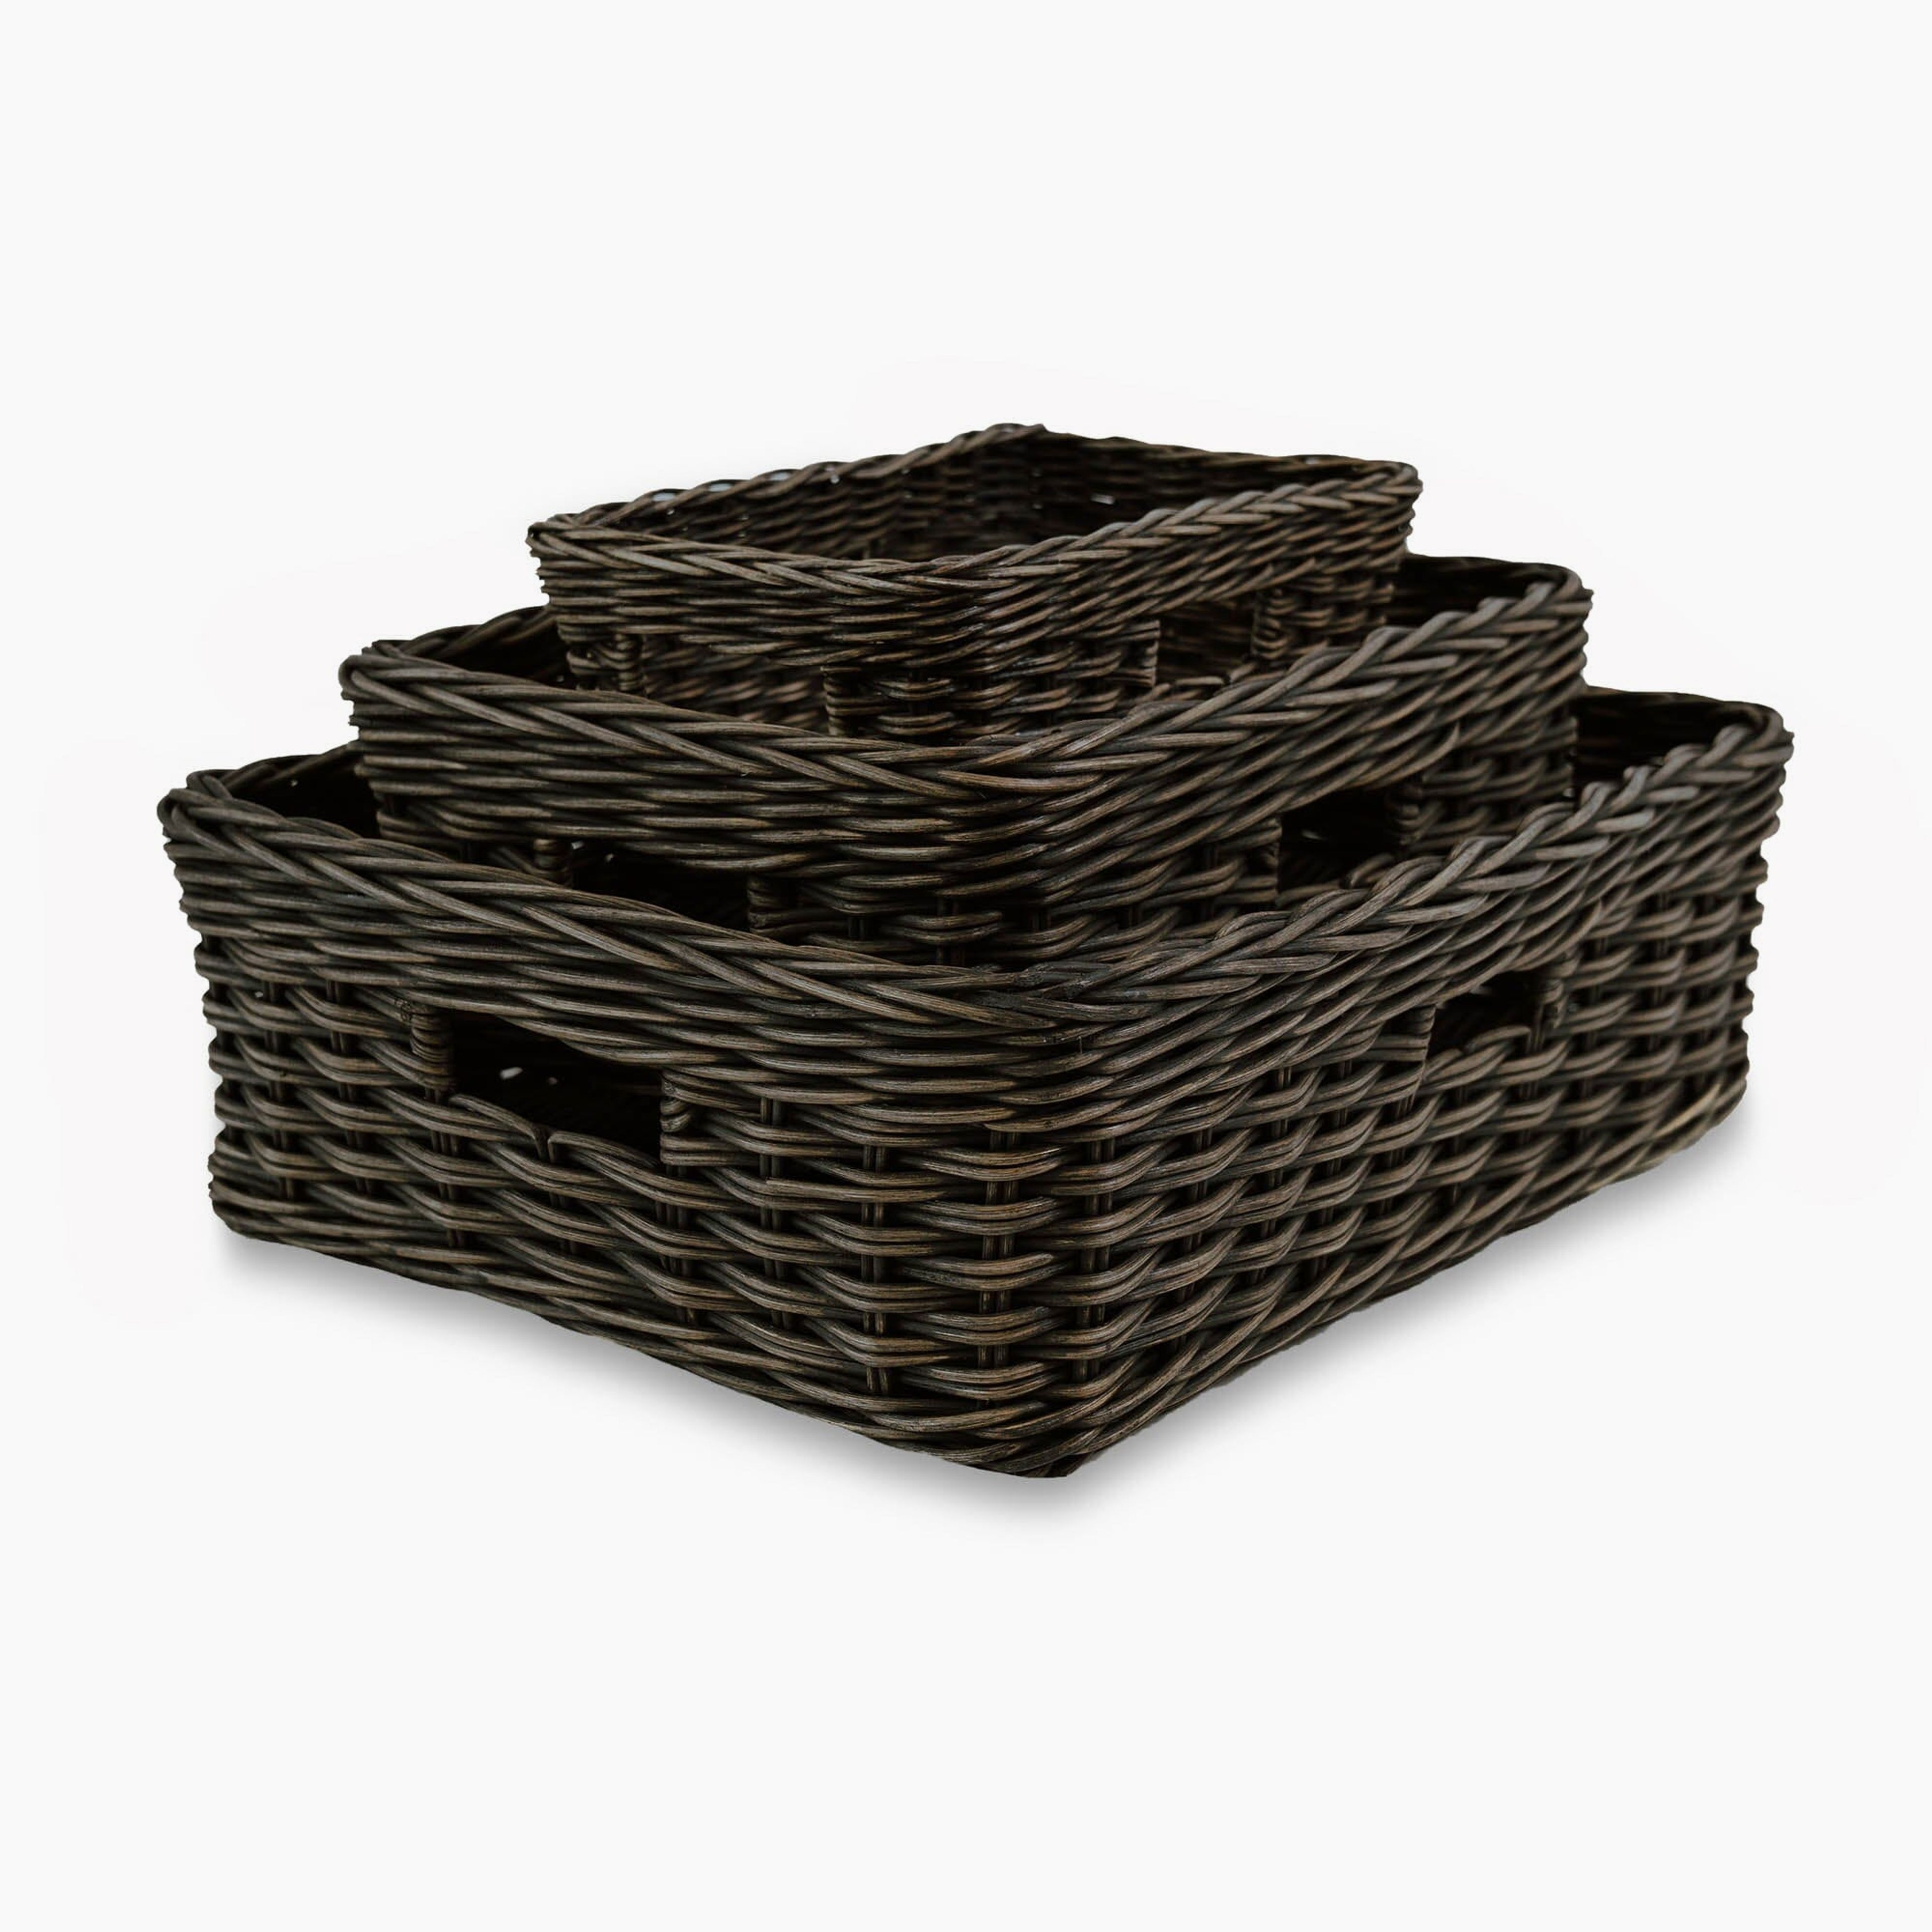 Rectangular Low Wicker Storage Basket